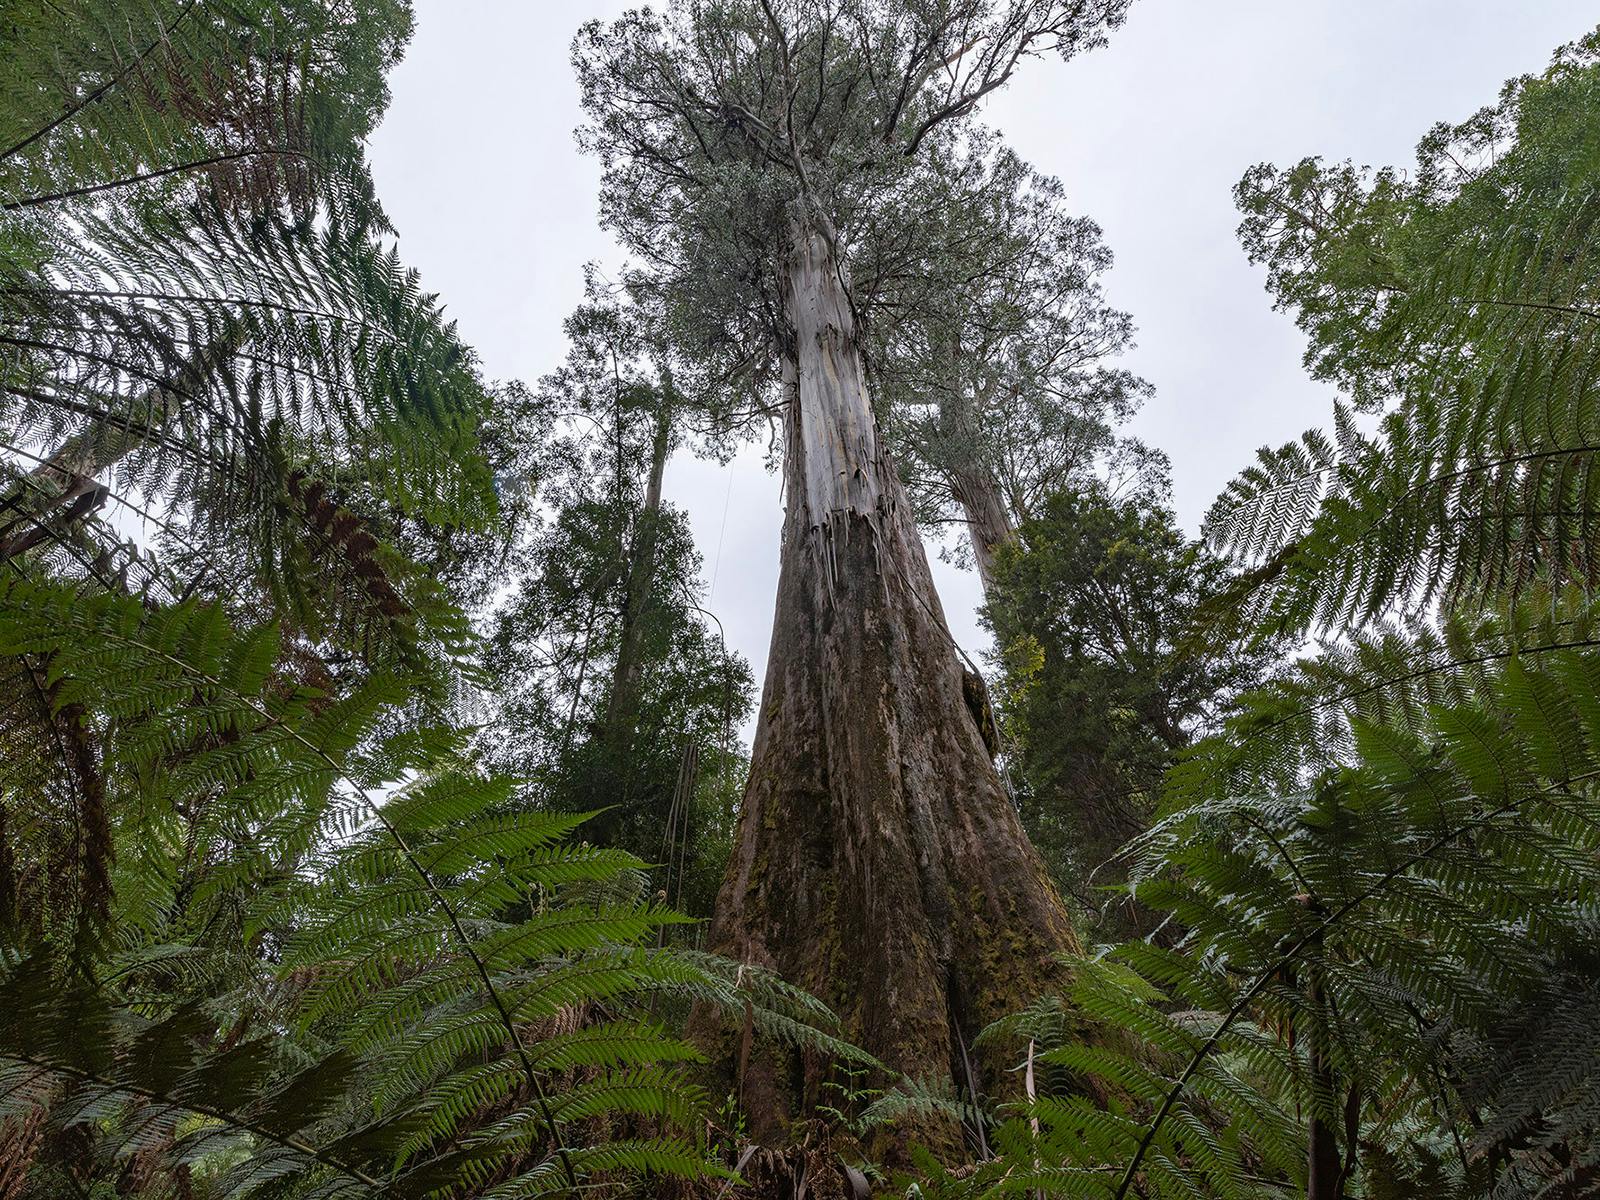 Giant trees in Tasmania's Styx Valley